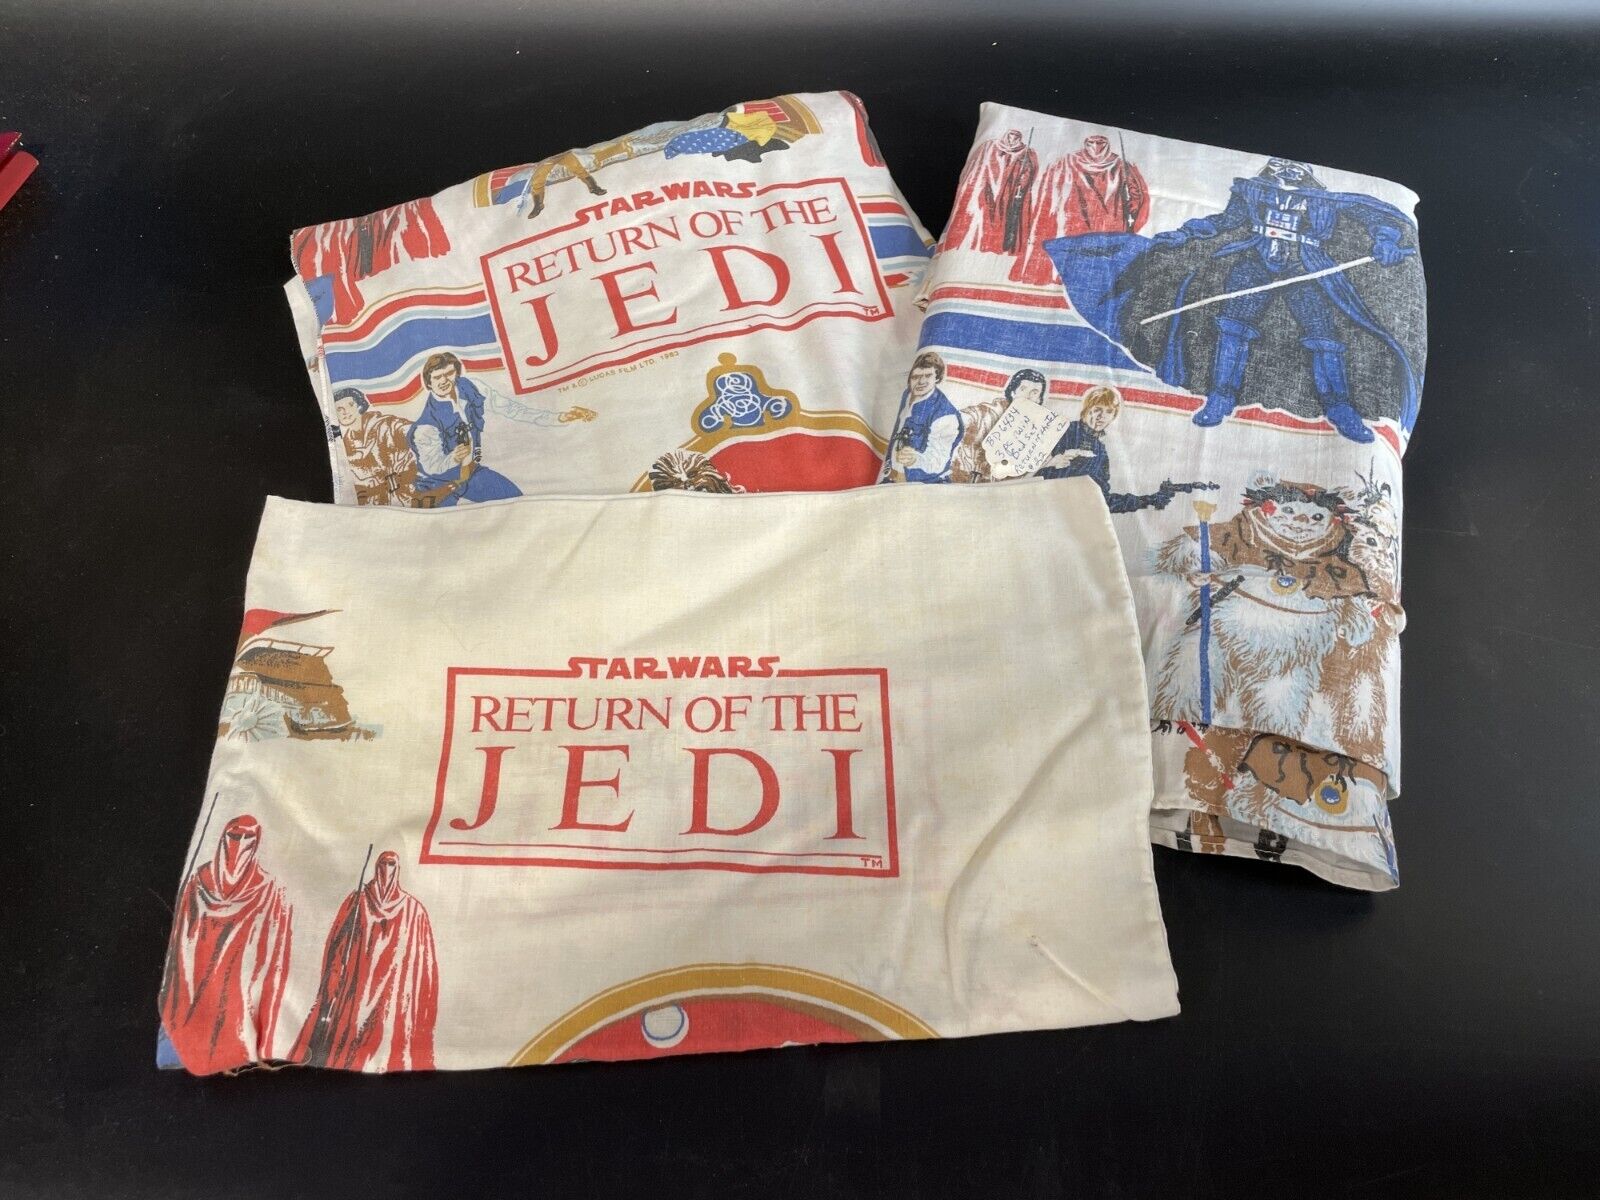 Vintage 1983 Star Wars Sheet Set - Return Of The Jedi - Lucas Film - Chewbacca